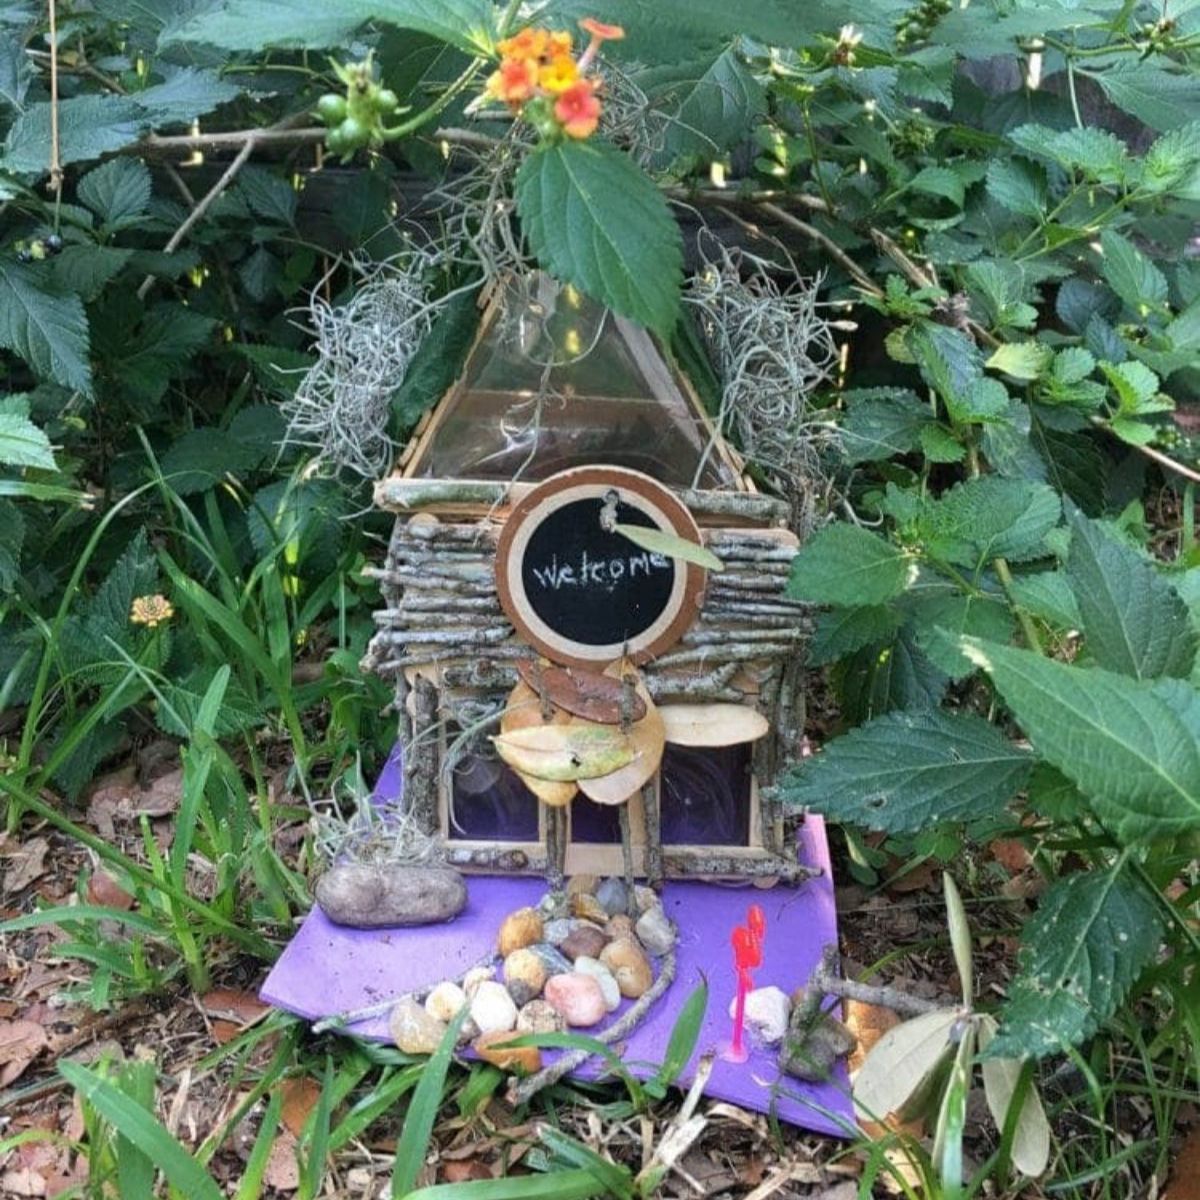 Homemade fairy house in a garden between plants.